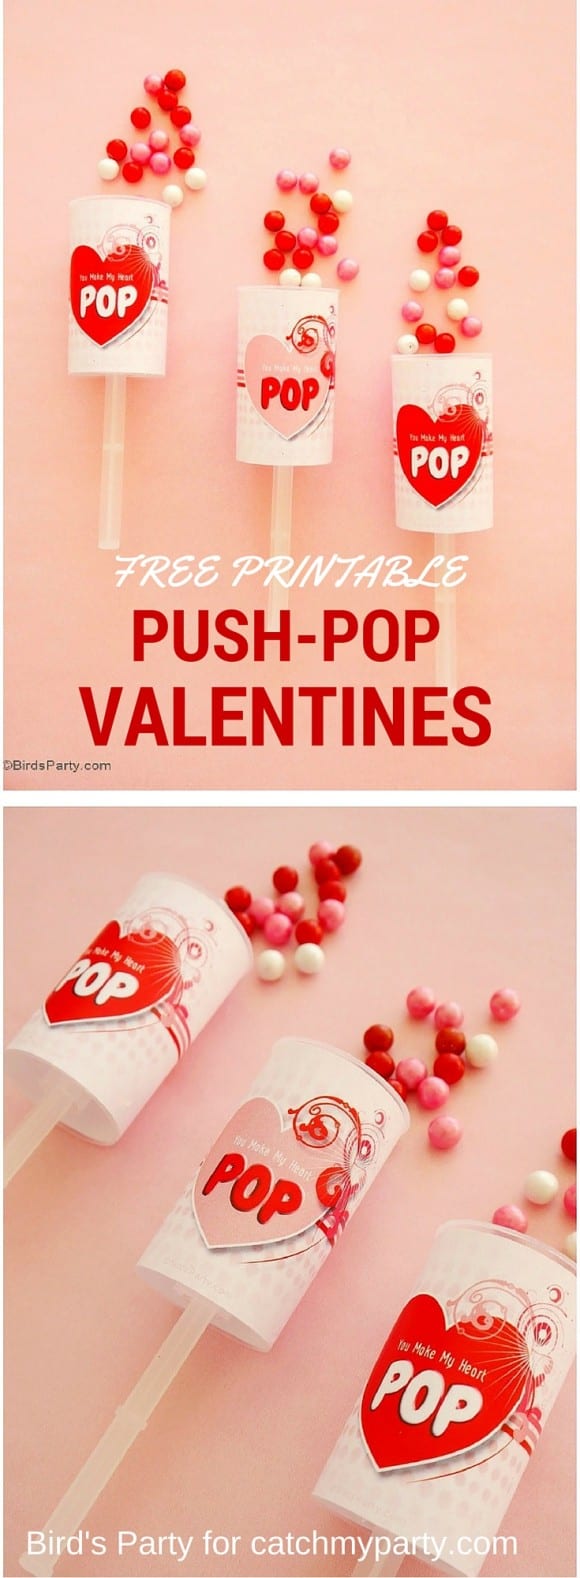 Free Valentine's Day Push Pop Printables | CatchMyParty.com